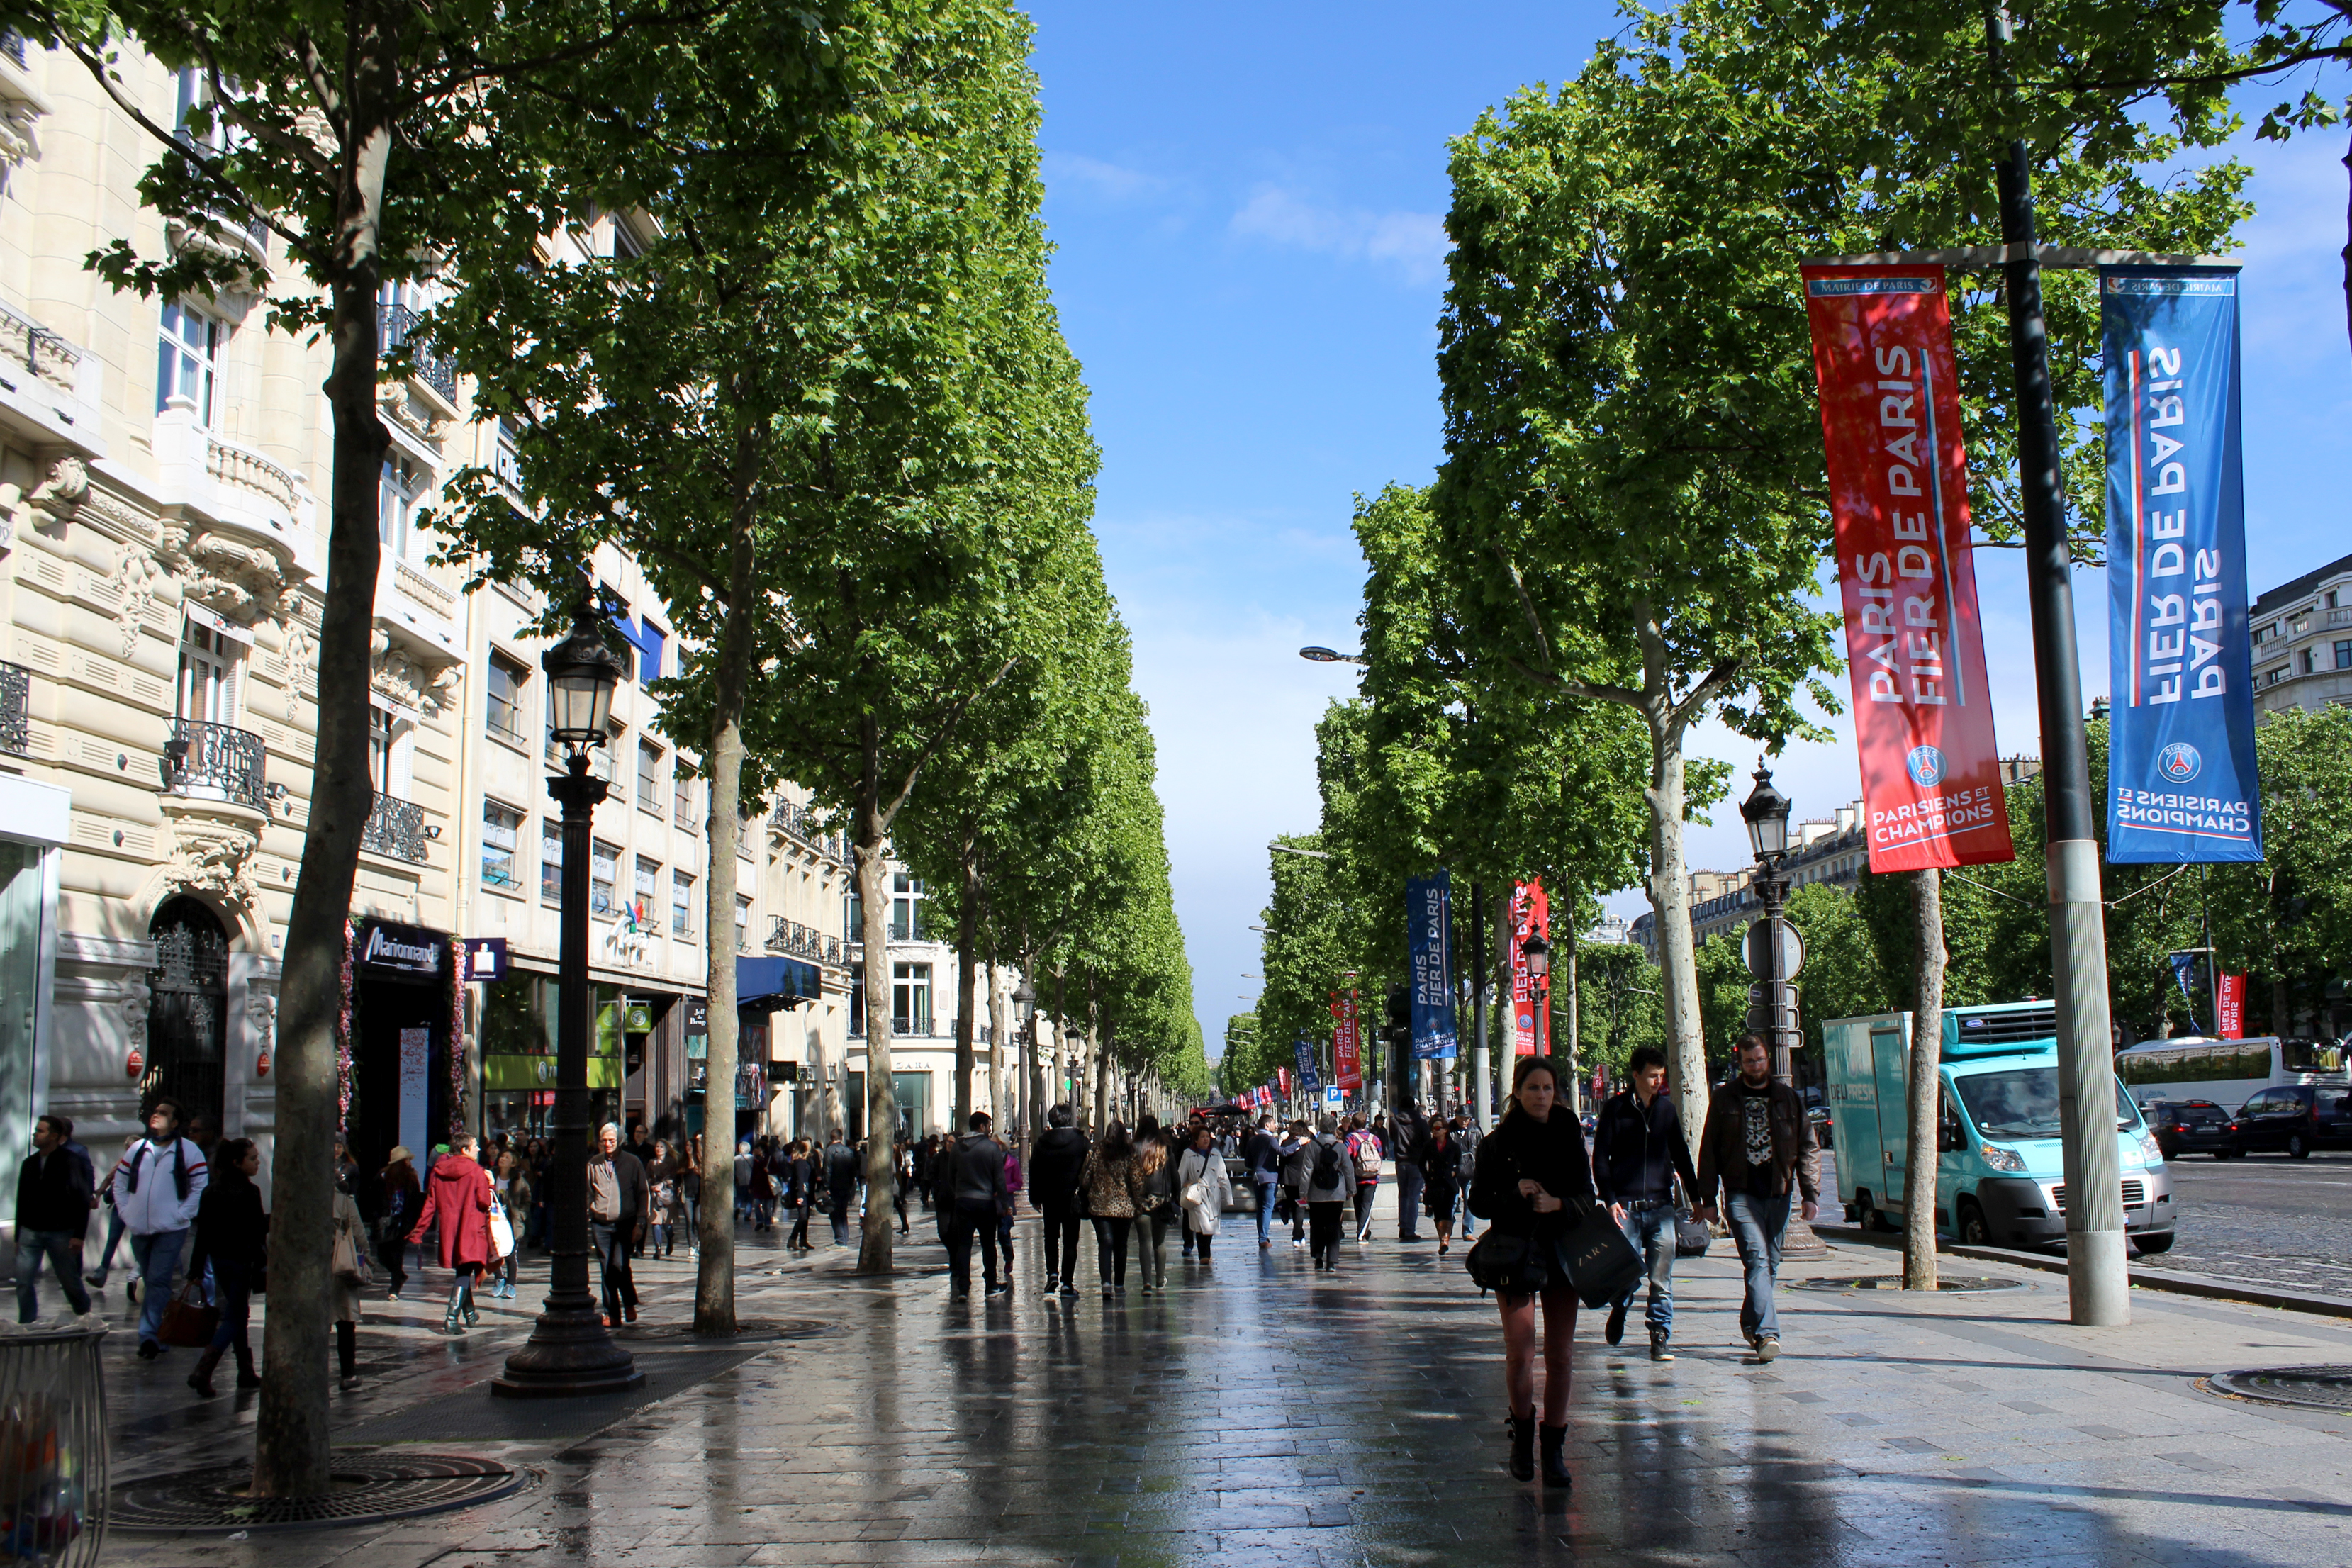 Shopping for Macarons at Ladurée on Champs Elysées